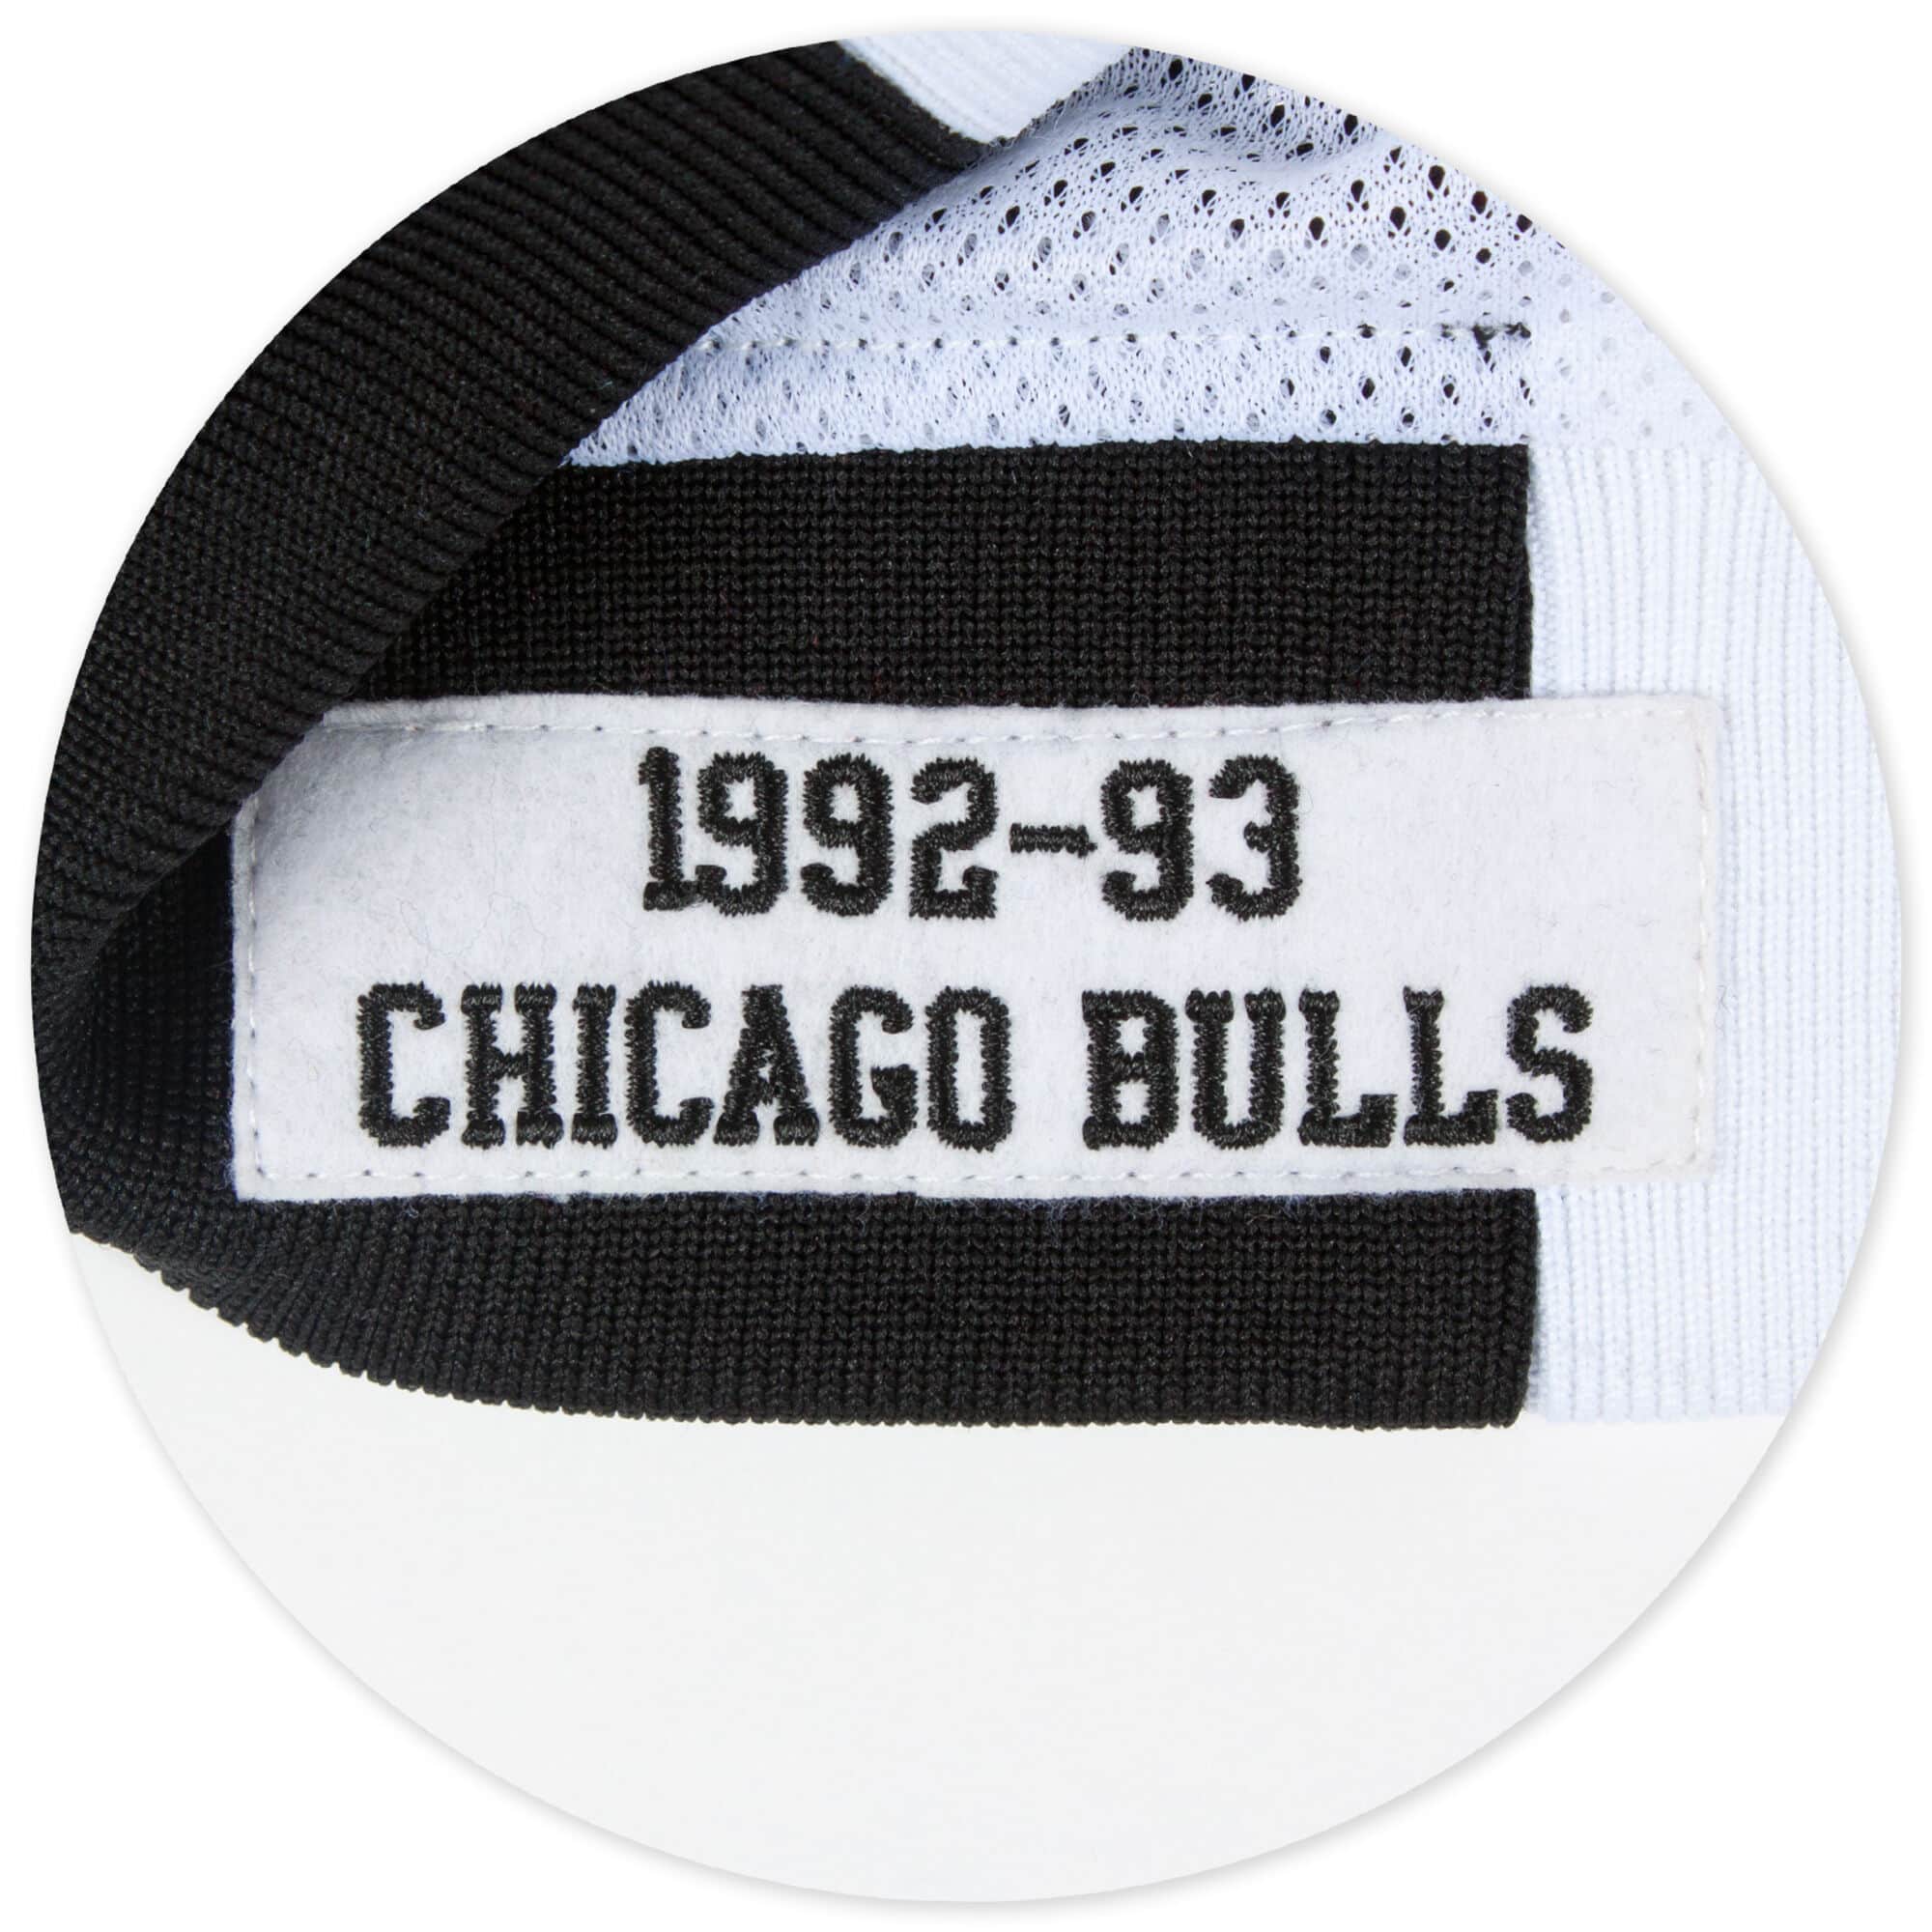 NBA Authentic Warm Up Jacket Chicago Bulls 1992-93